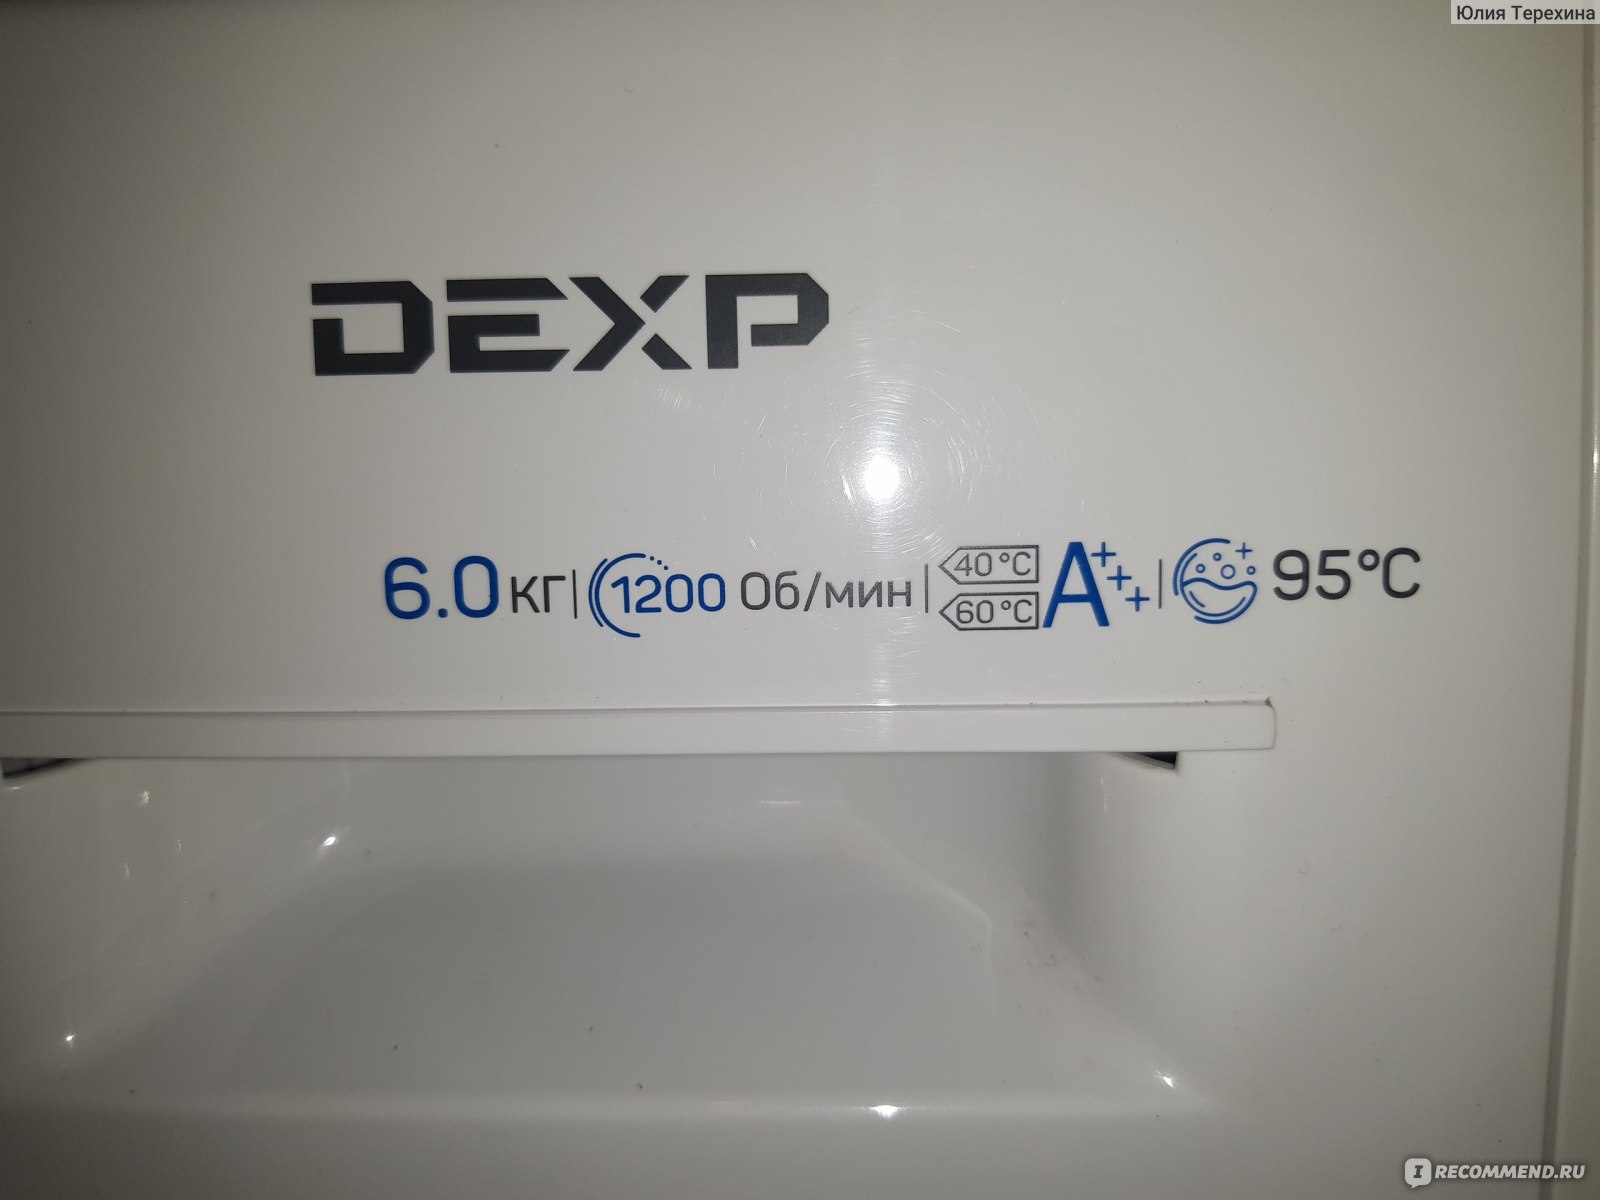 DEXP стиральная машина WM-f612bdhe/ww параметры стирк